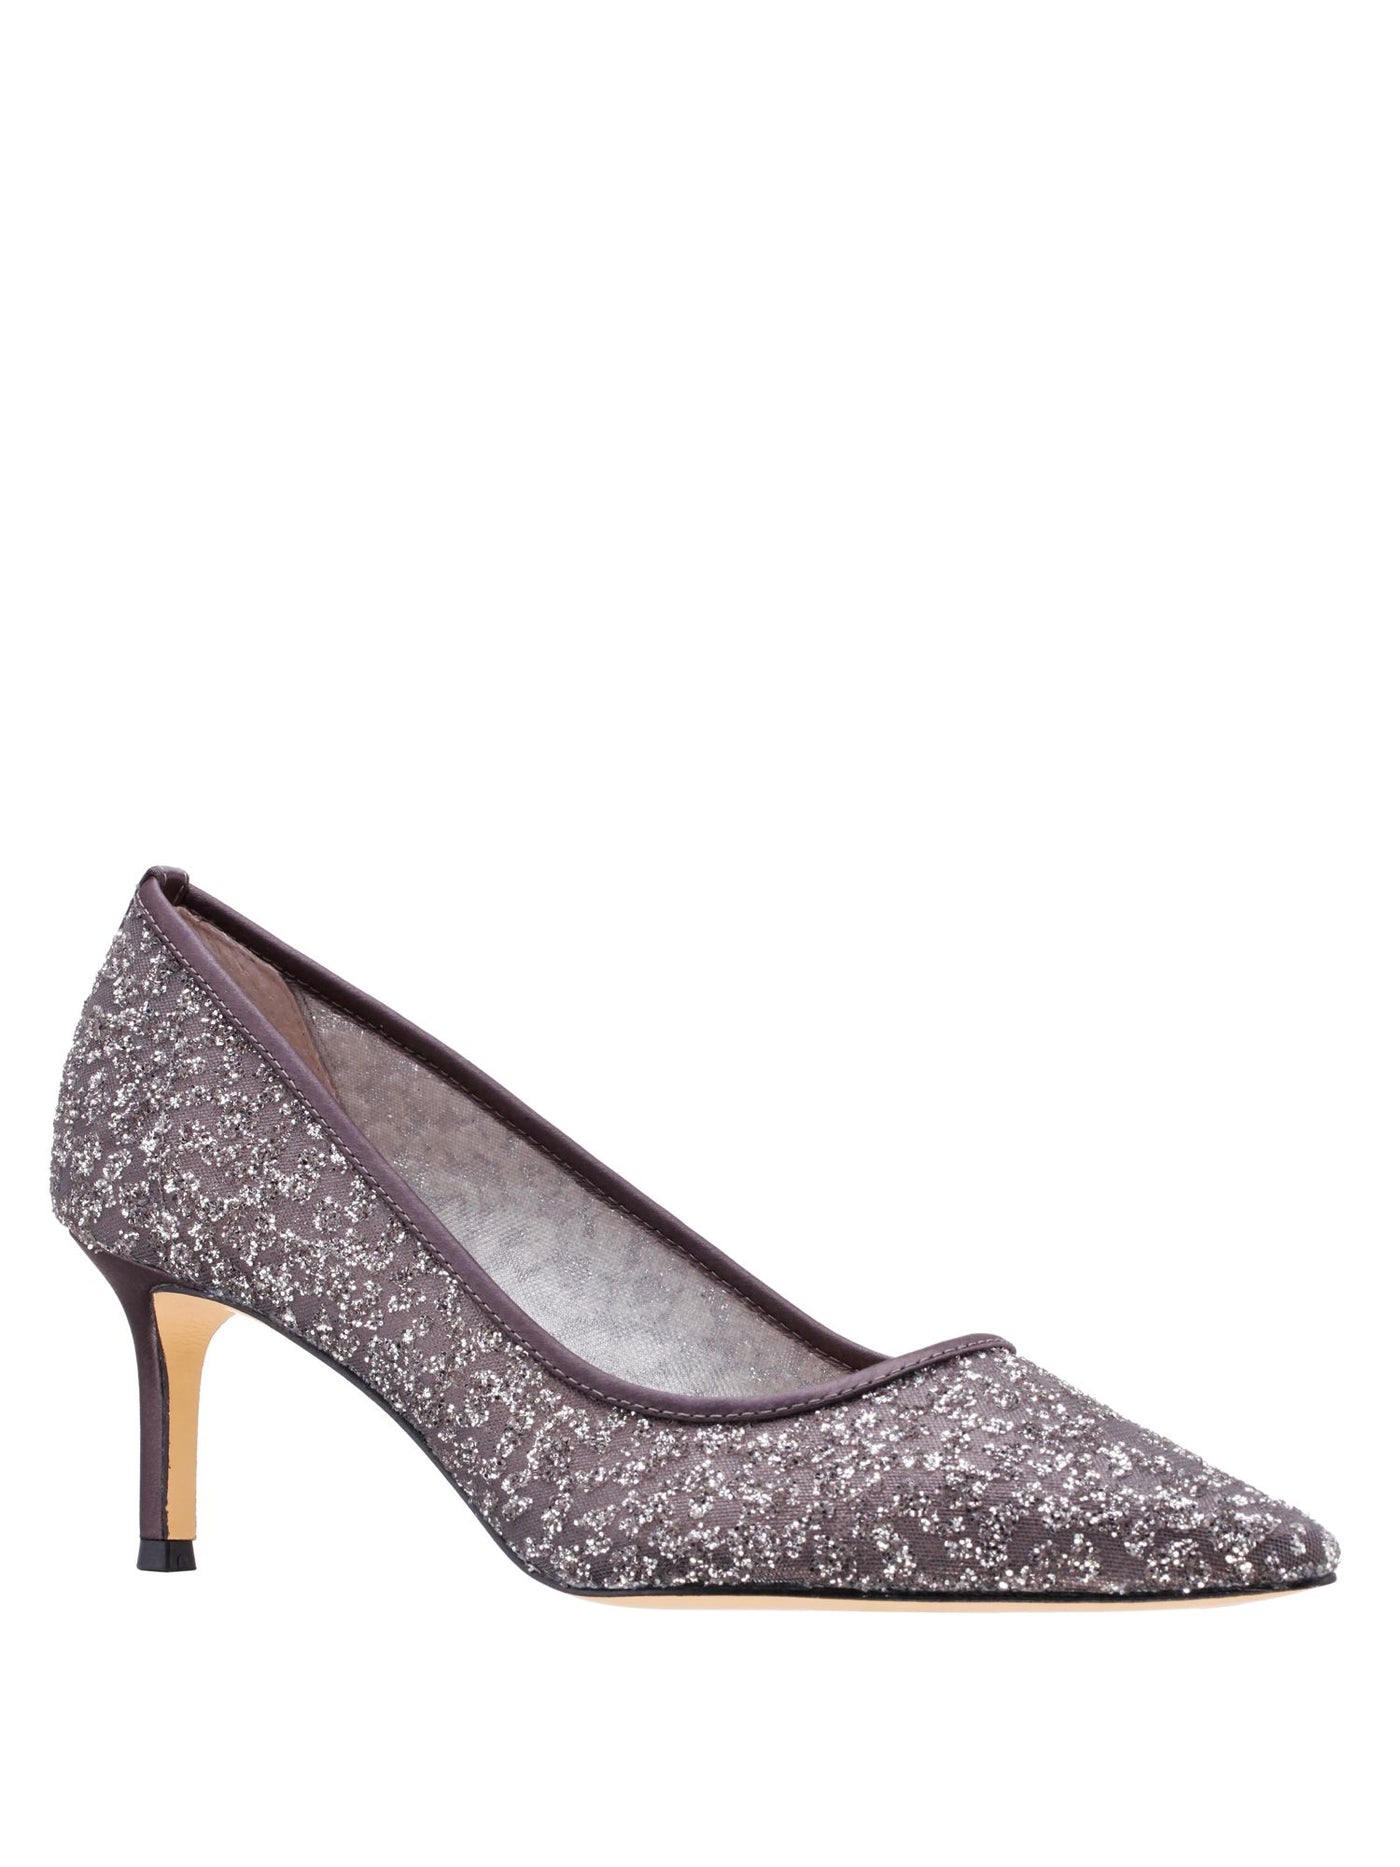 NINA NEW YORK Womens Gray Mixed Media Mesh Glitter Nikki Pointed Toe Kitten Heel Slip On Pumps Shoes 9.5 M